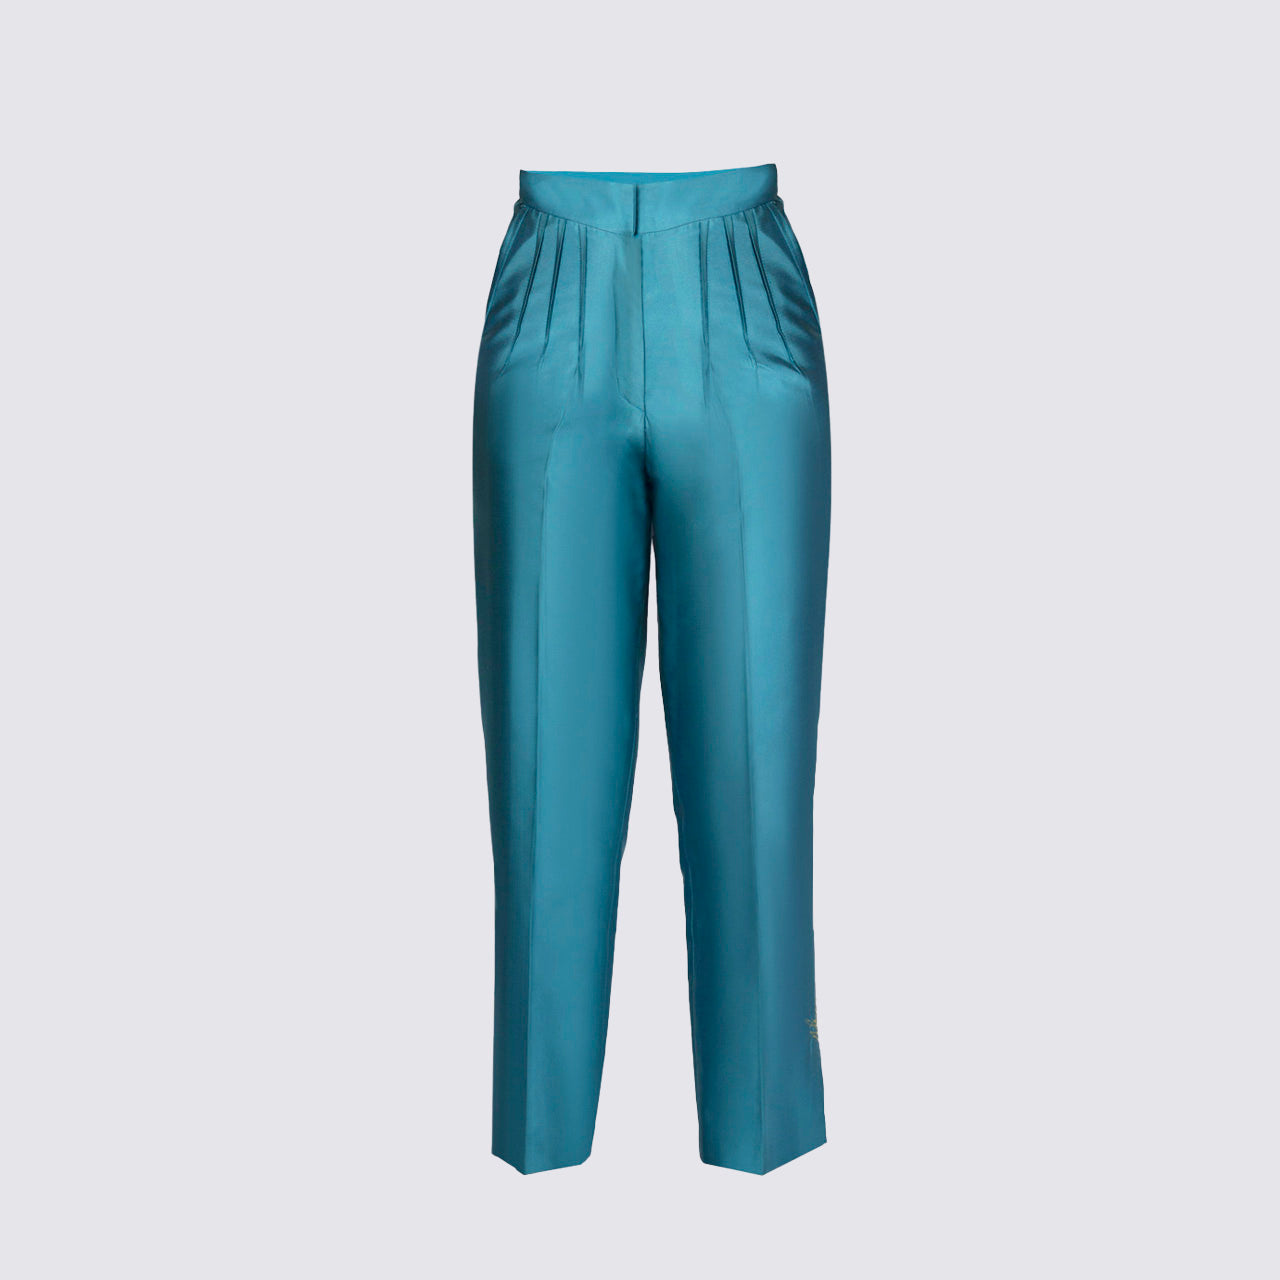 Slay - Pin Tuck Blue Pants